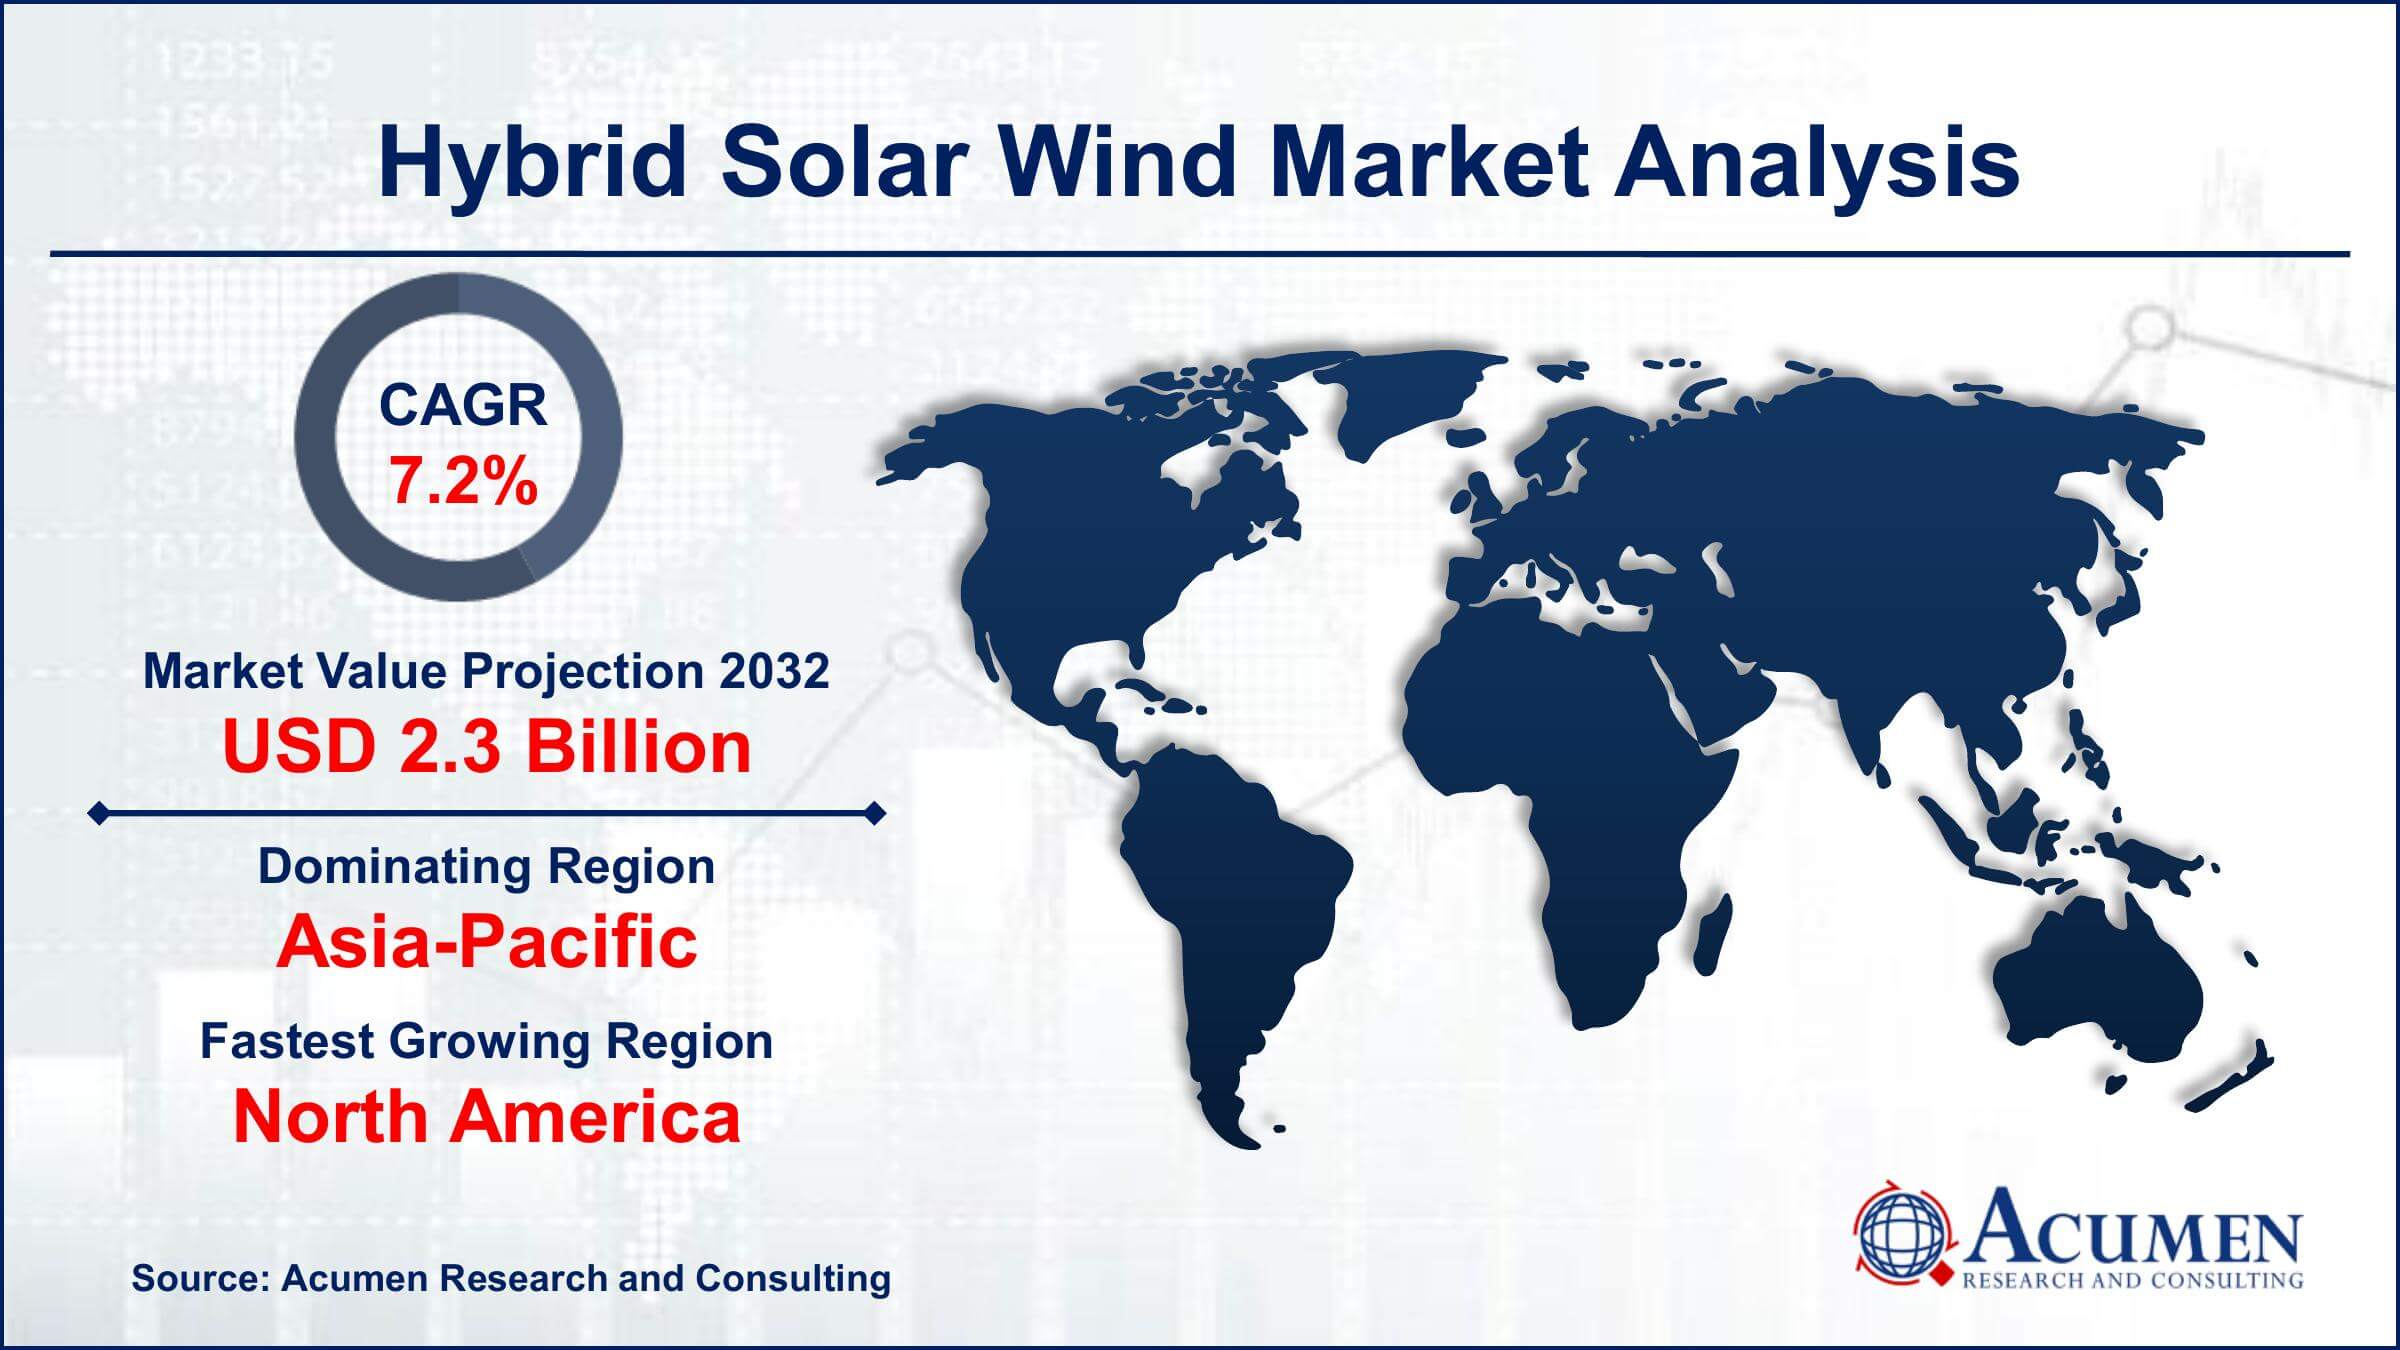 Global Hybrid Solar Wind Market Trends